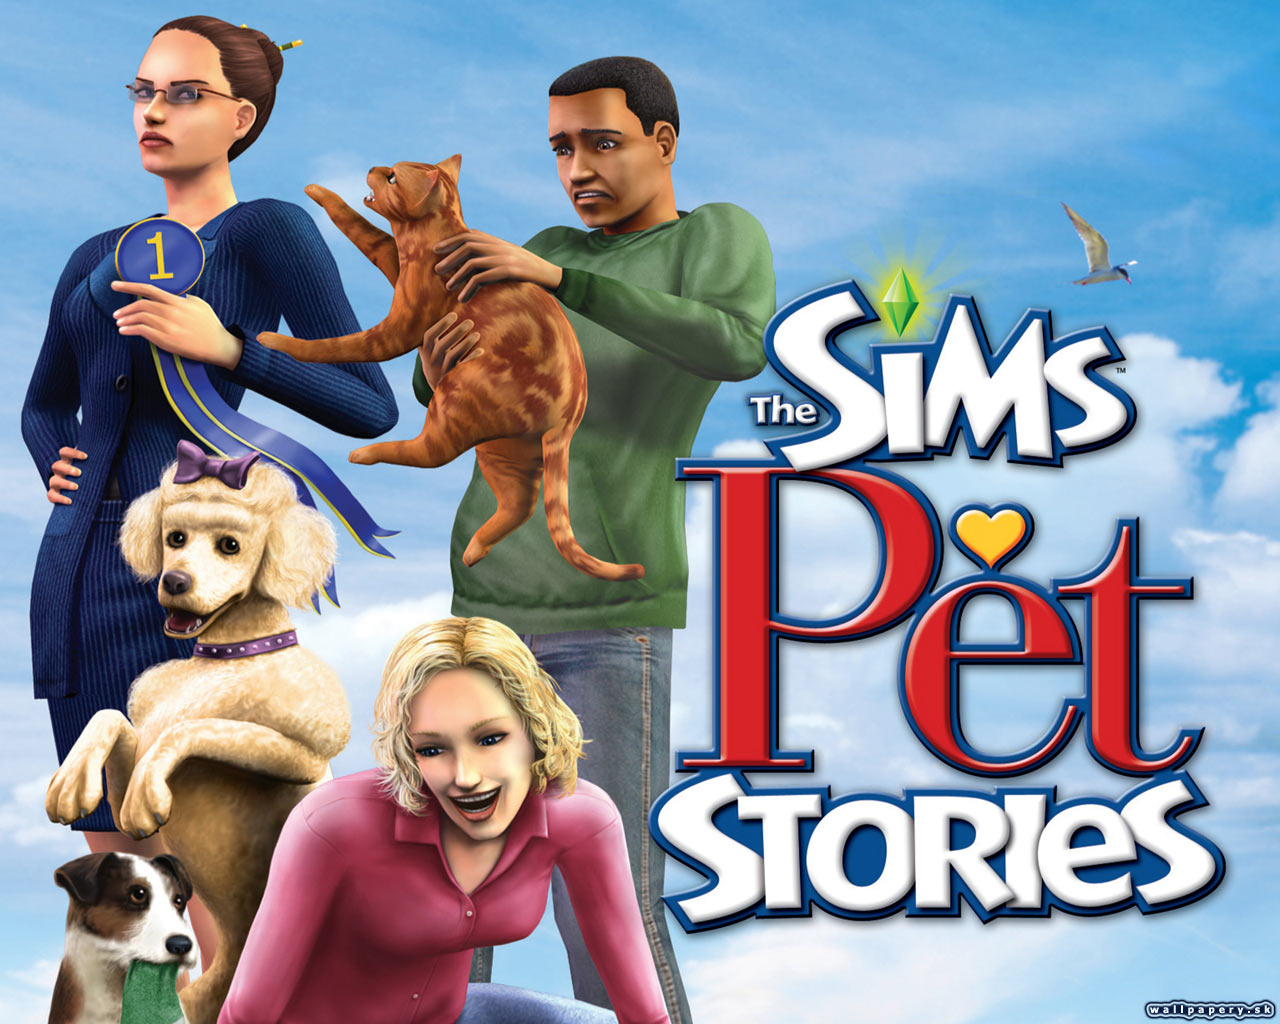 The Sims Pet Stories - wallpaper 1